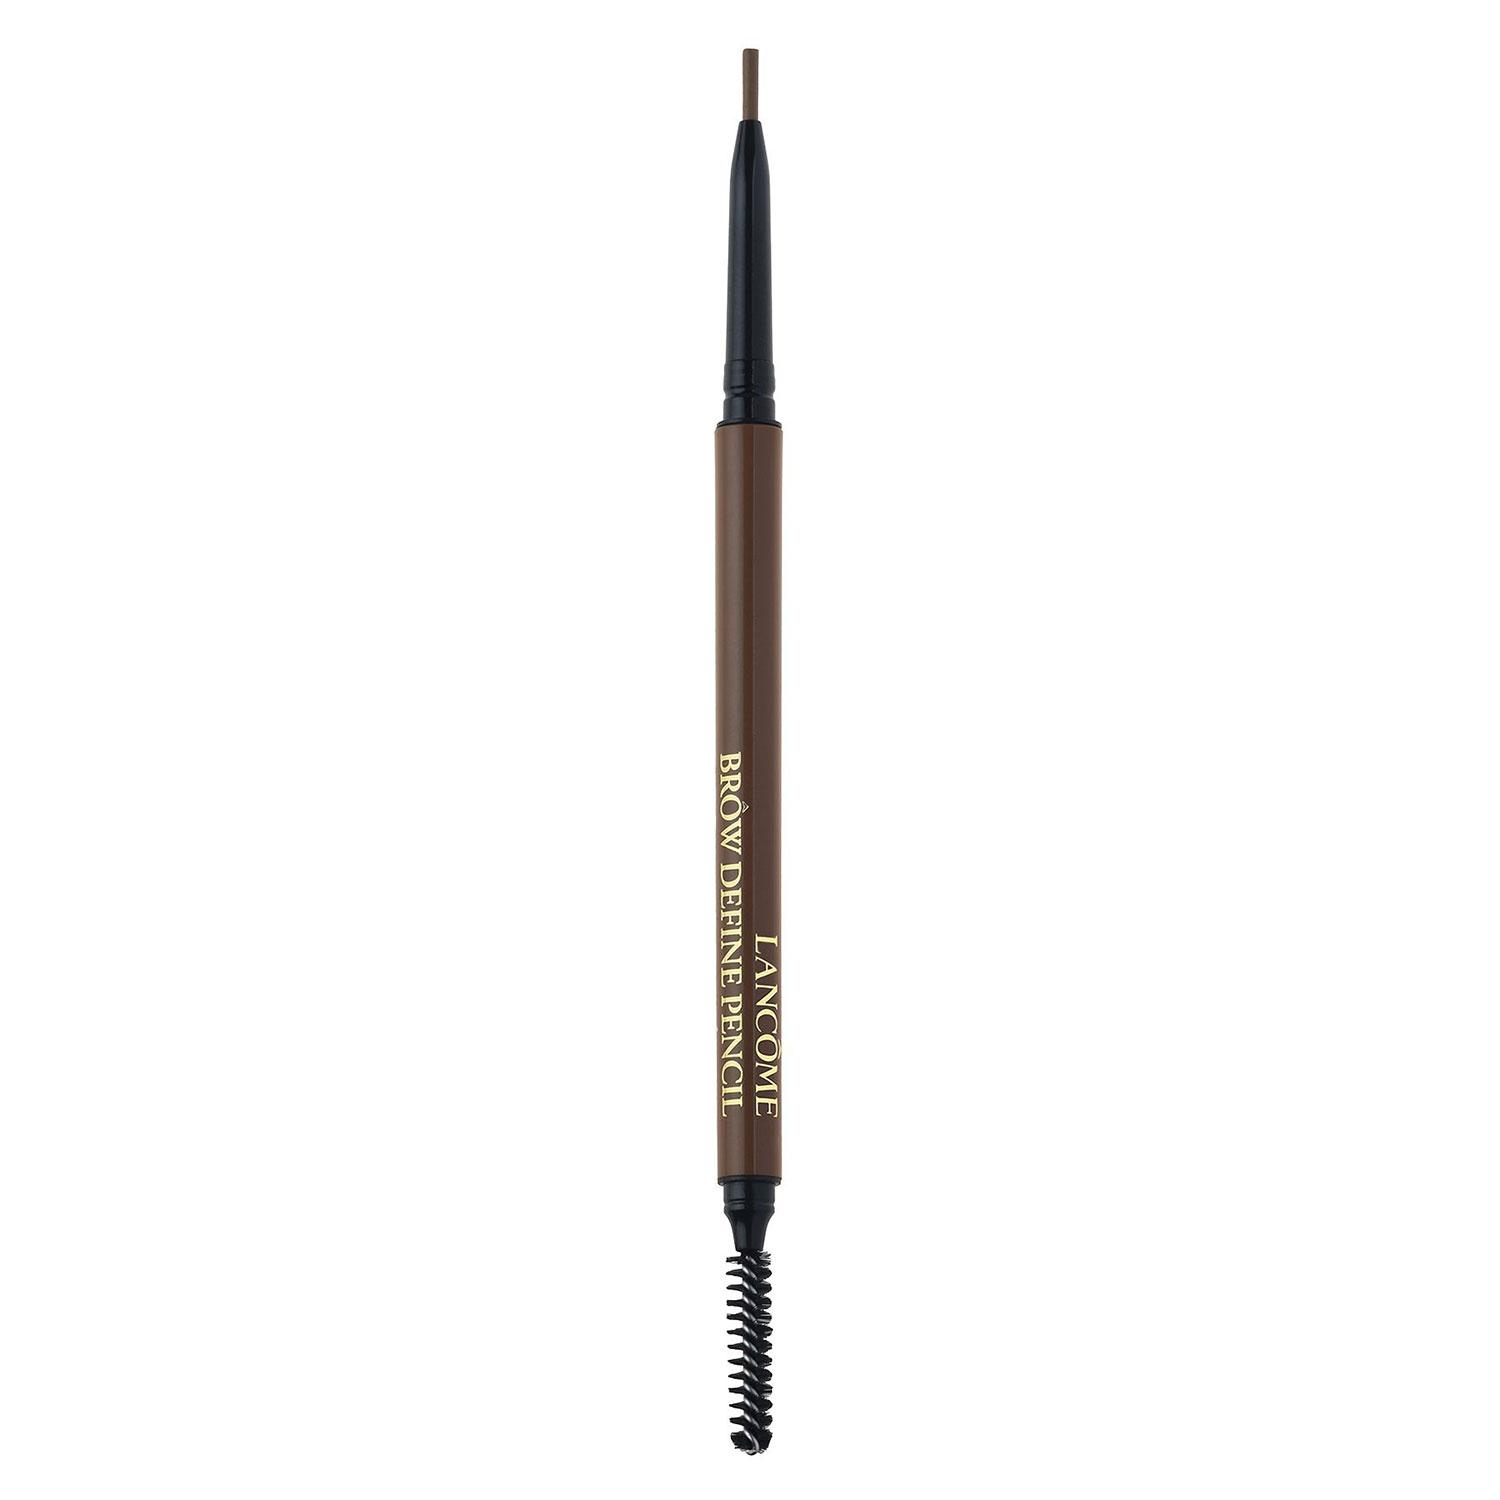 Lancôme Brows - Brow Define Pencil Chestnut 07